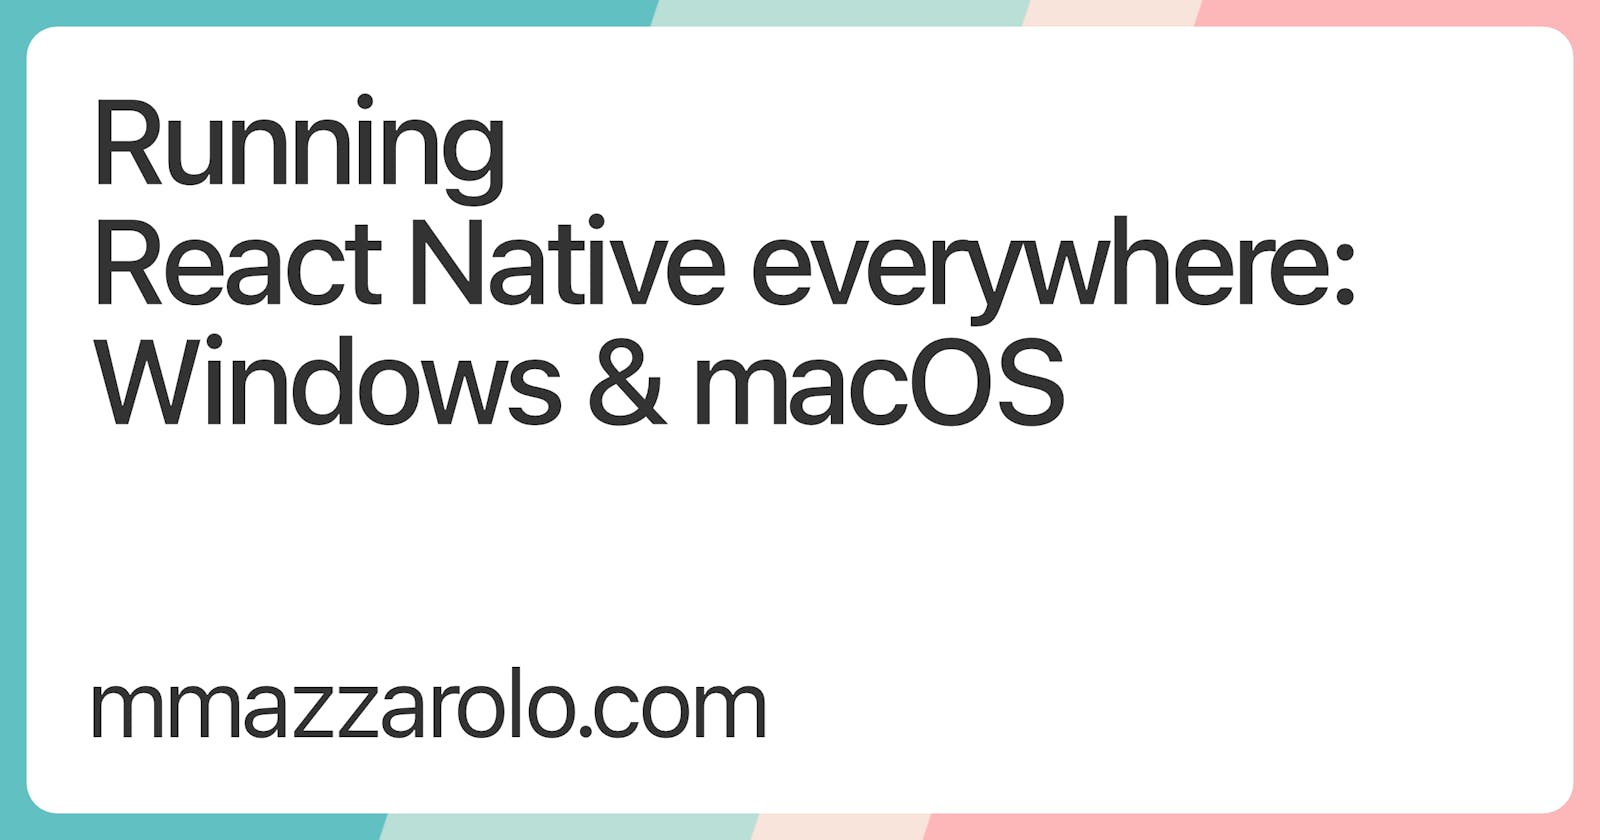 Running React Native everywhere: Windows & macOS